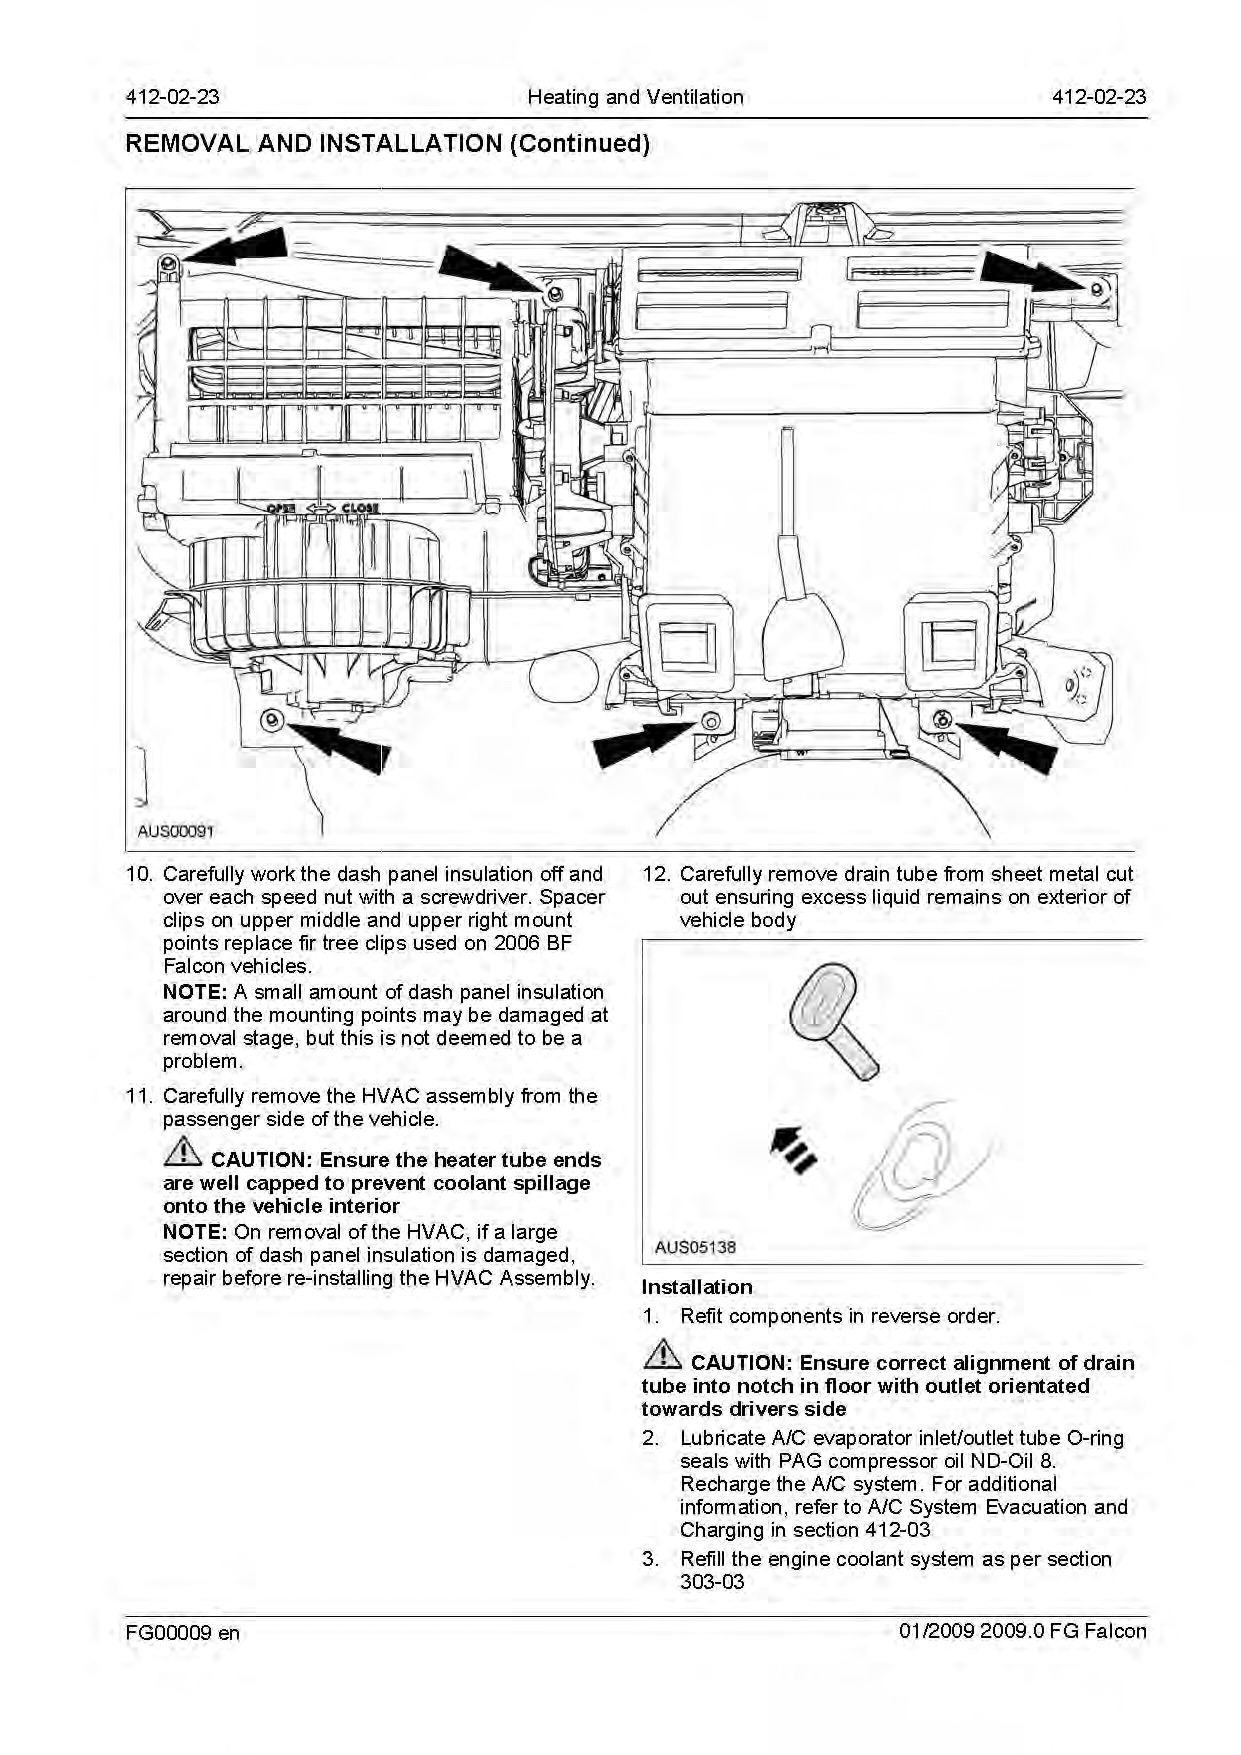 2014 Ford Falcon Repair Manual Heating and Ventilation